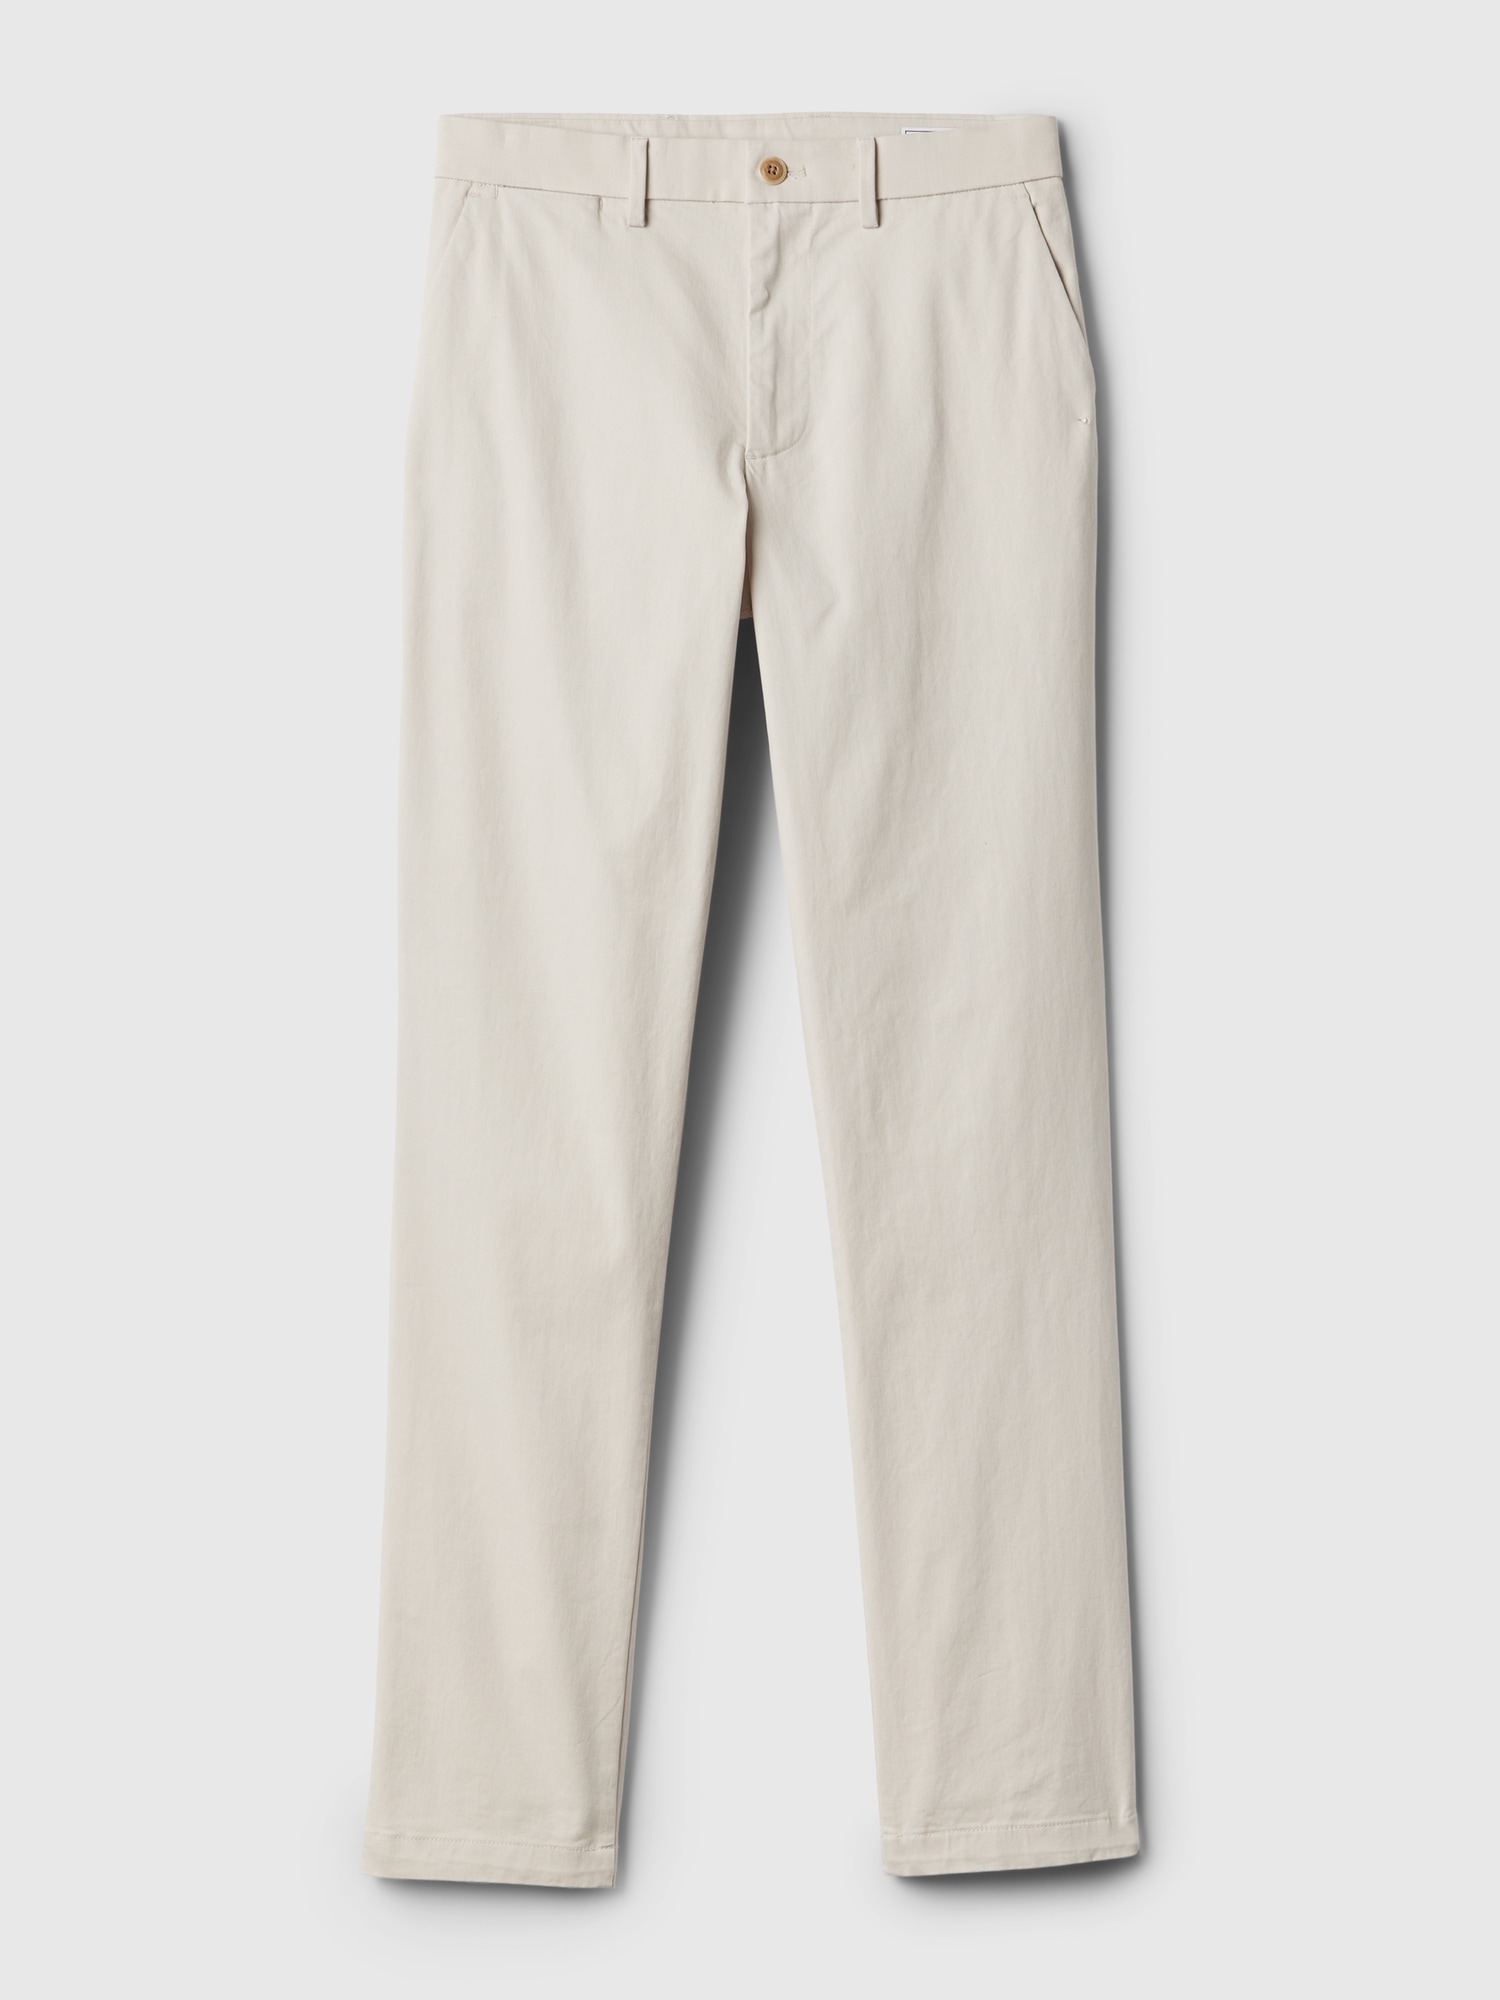 Gap Men's Modern Khakis in Slim Fit with GapFlex (Size 33X32) *New